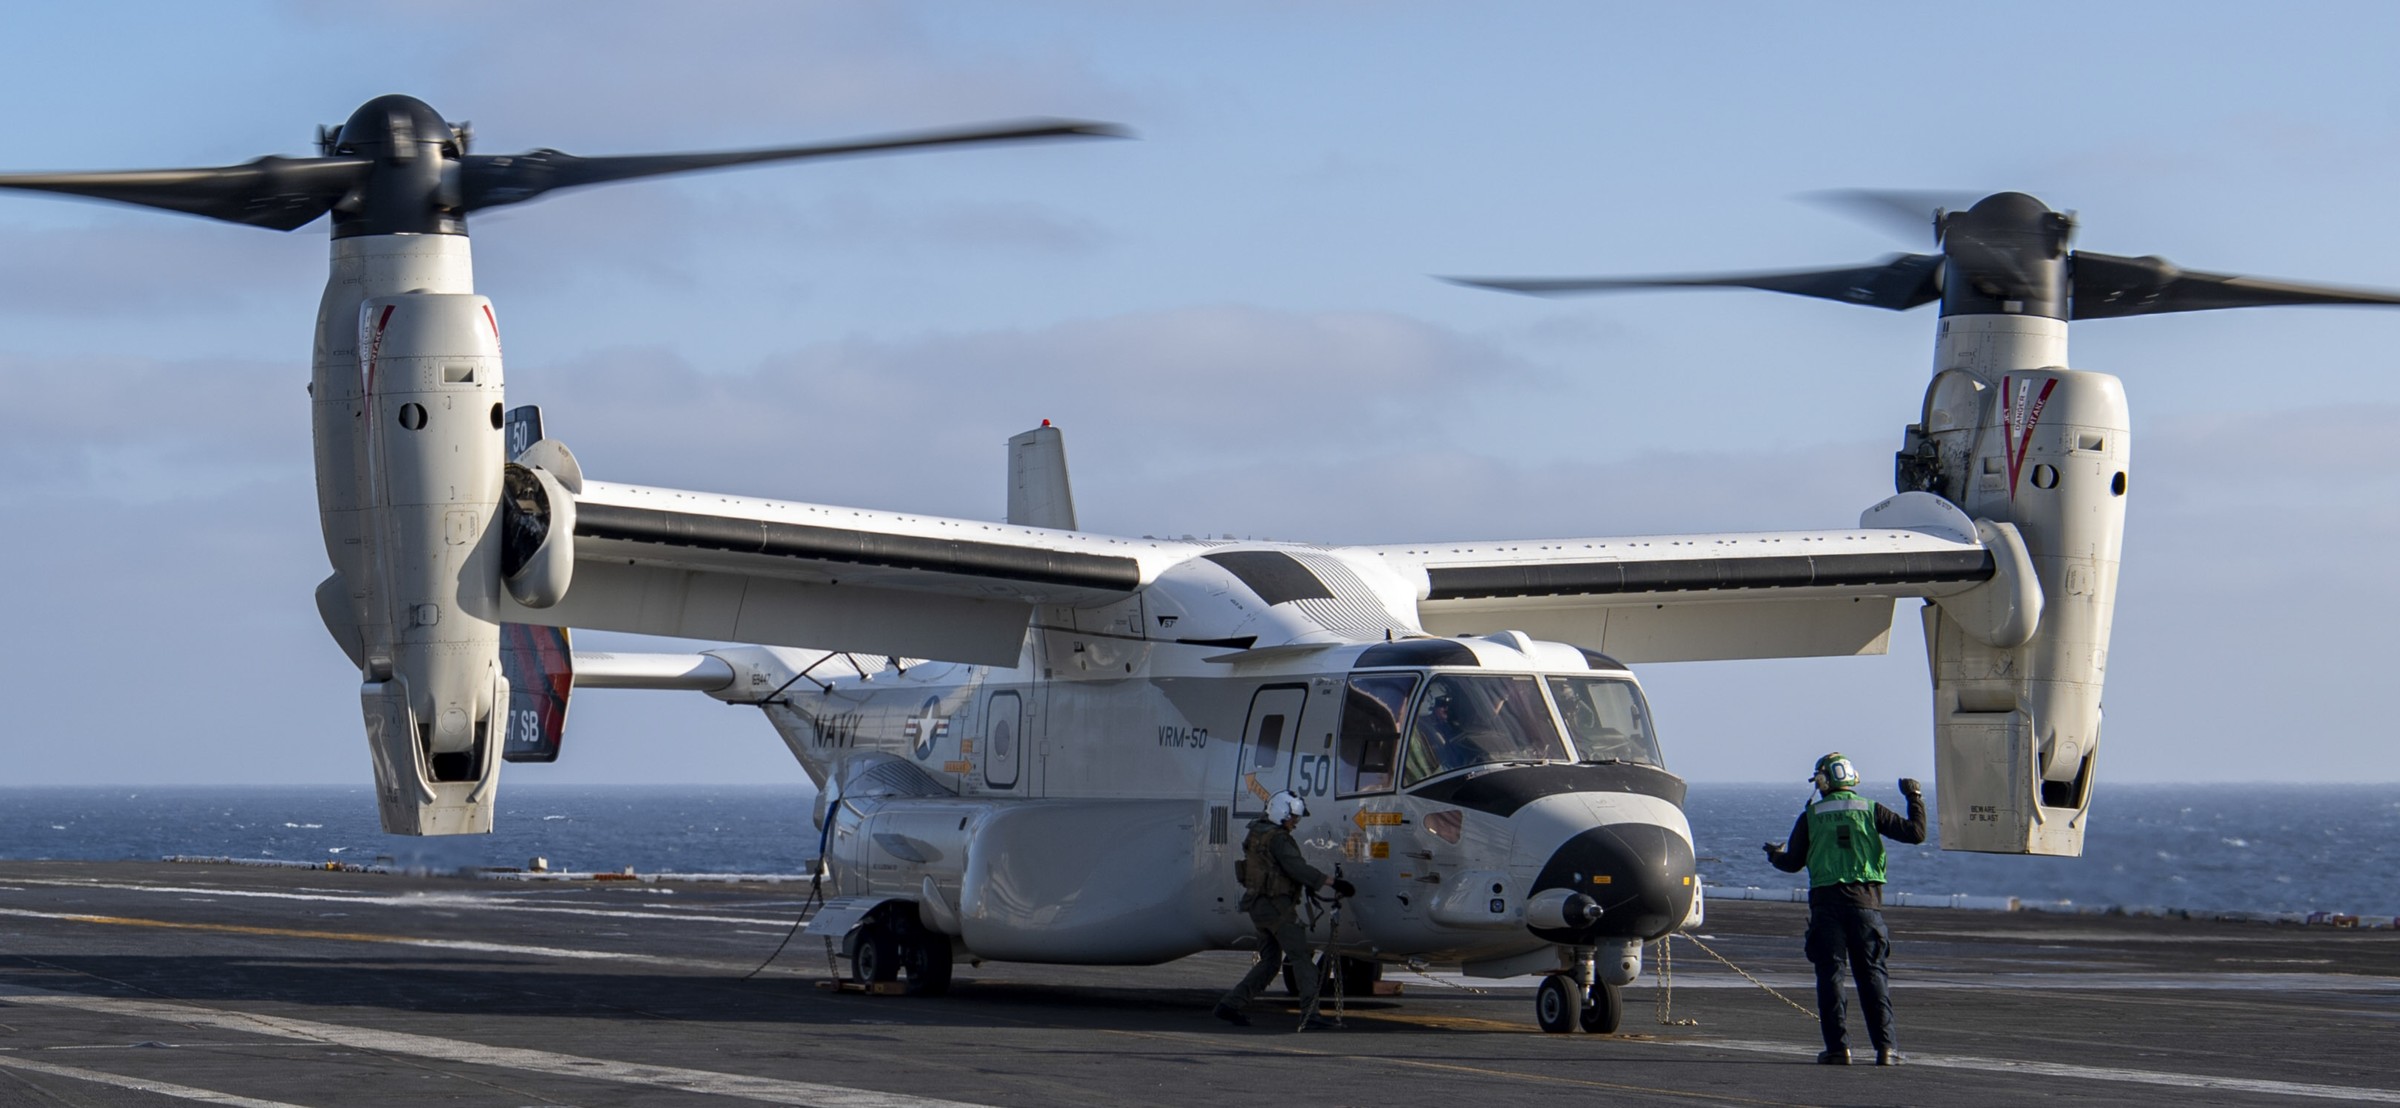 vrm-50 sun hawks fleet logistics multi mission squadron us navy cmv-22b osprey replacement frs uss nimitz cvn-68 27